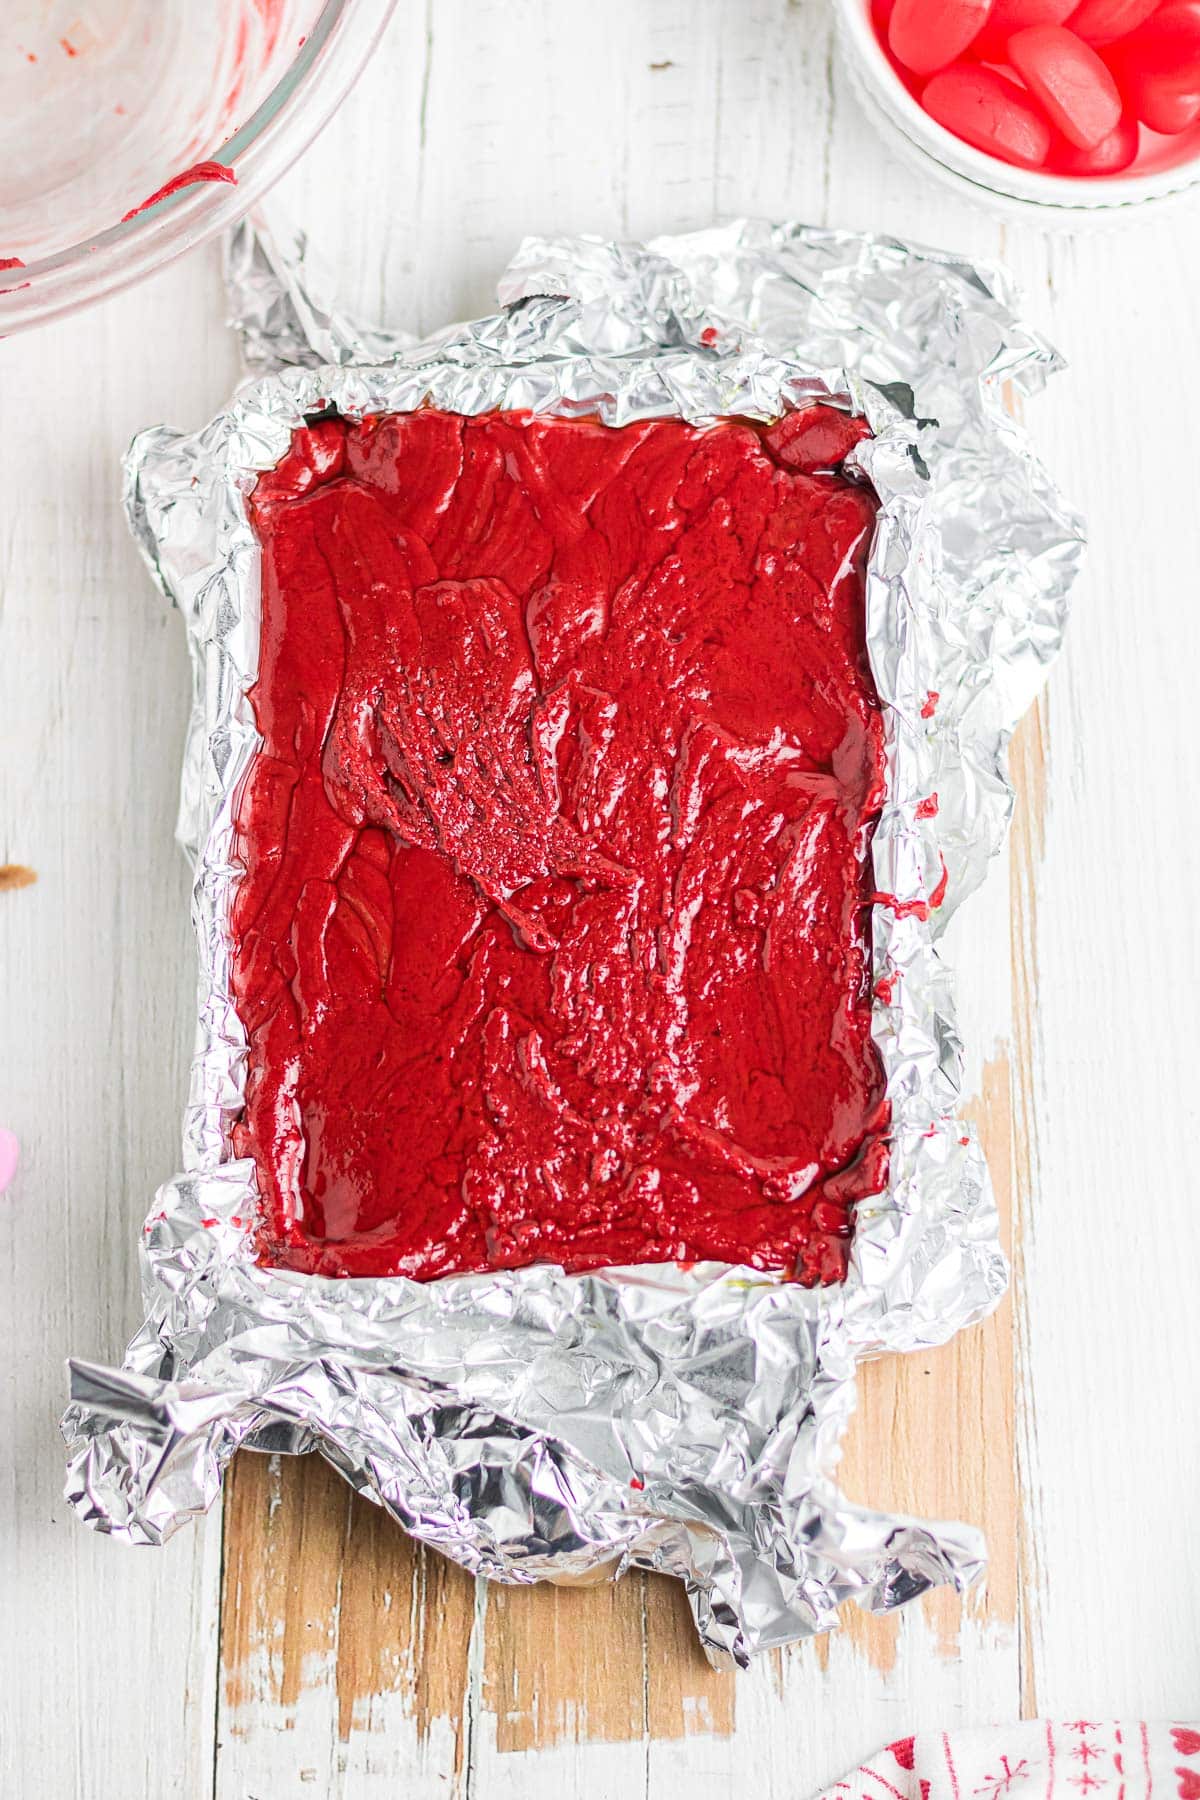 Red velvet fudge batter in a lined pan.